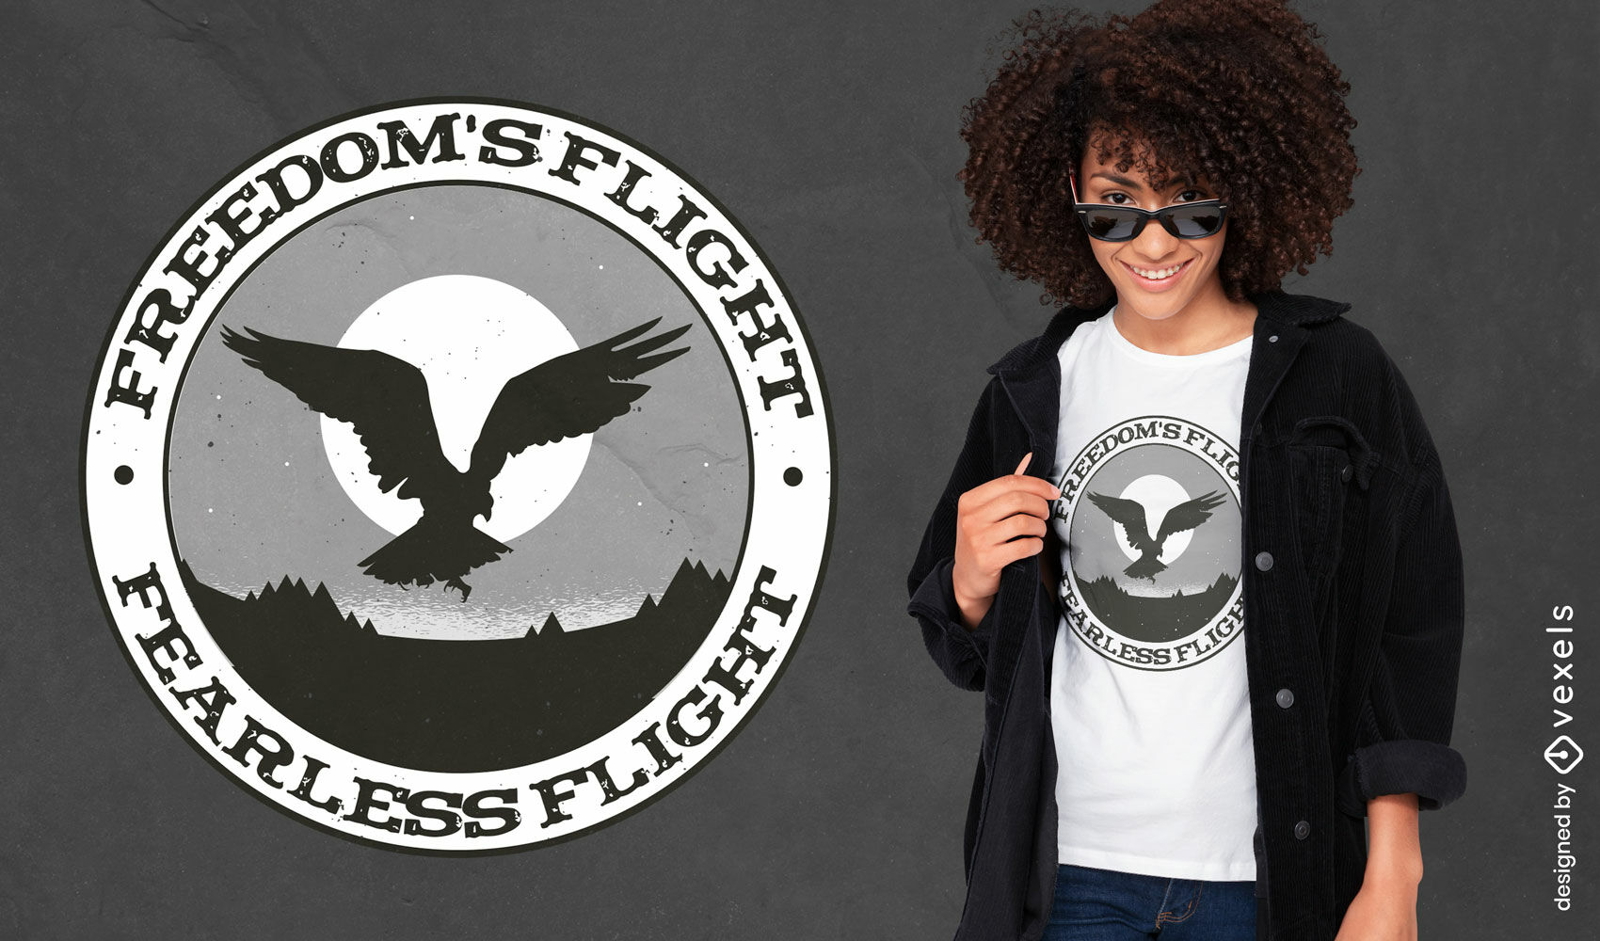 Freedom's fearless flight t-shirt design